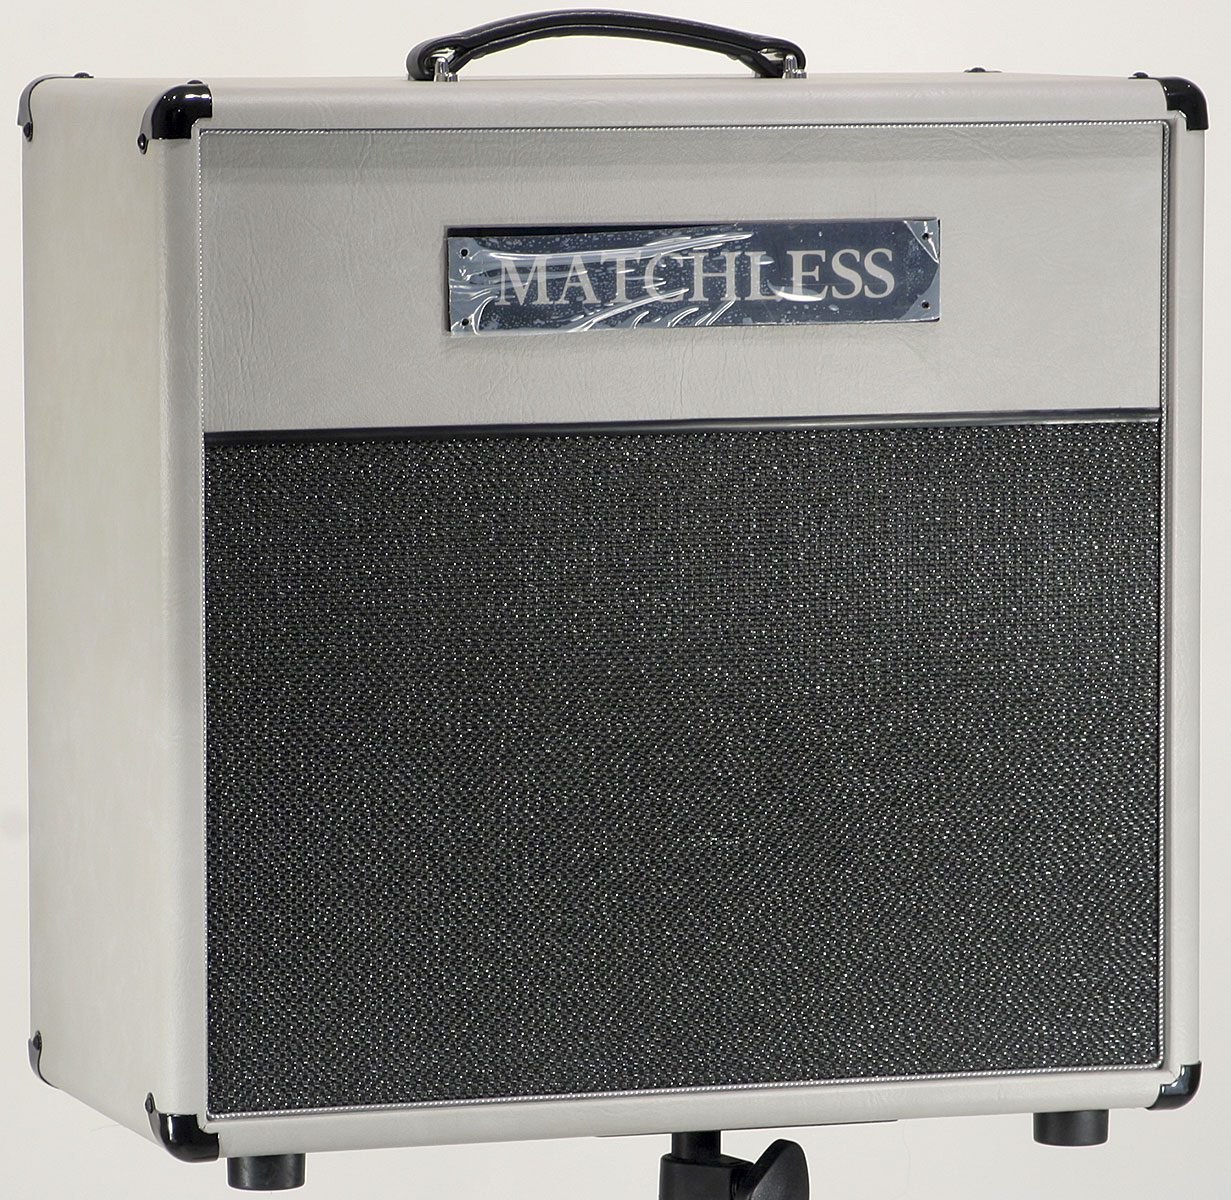 Matchless Ess 1x12 30w 8-ohms Gray/silver - Cabina amplificador para guitarra eléctrica - Variation 2